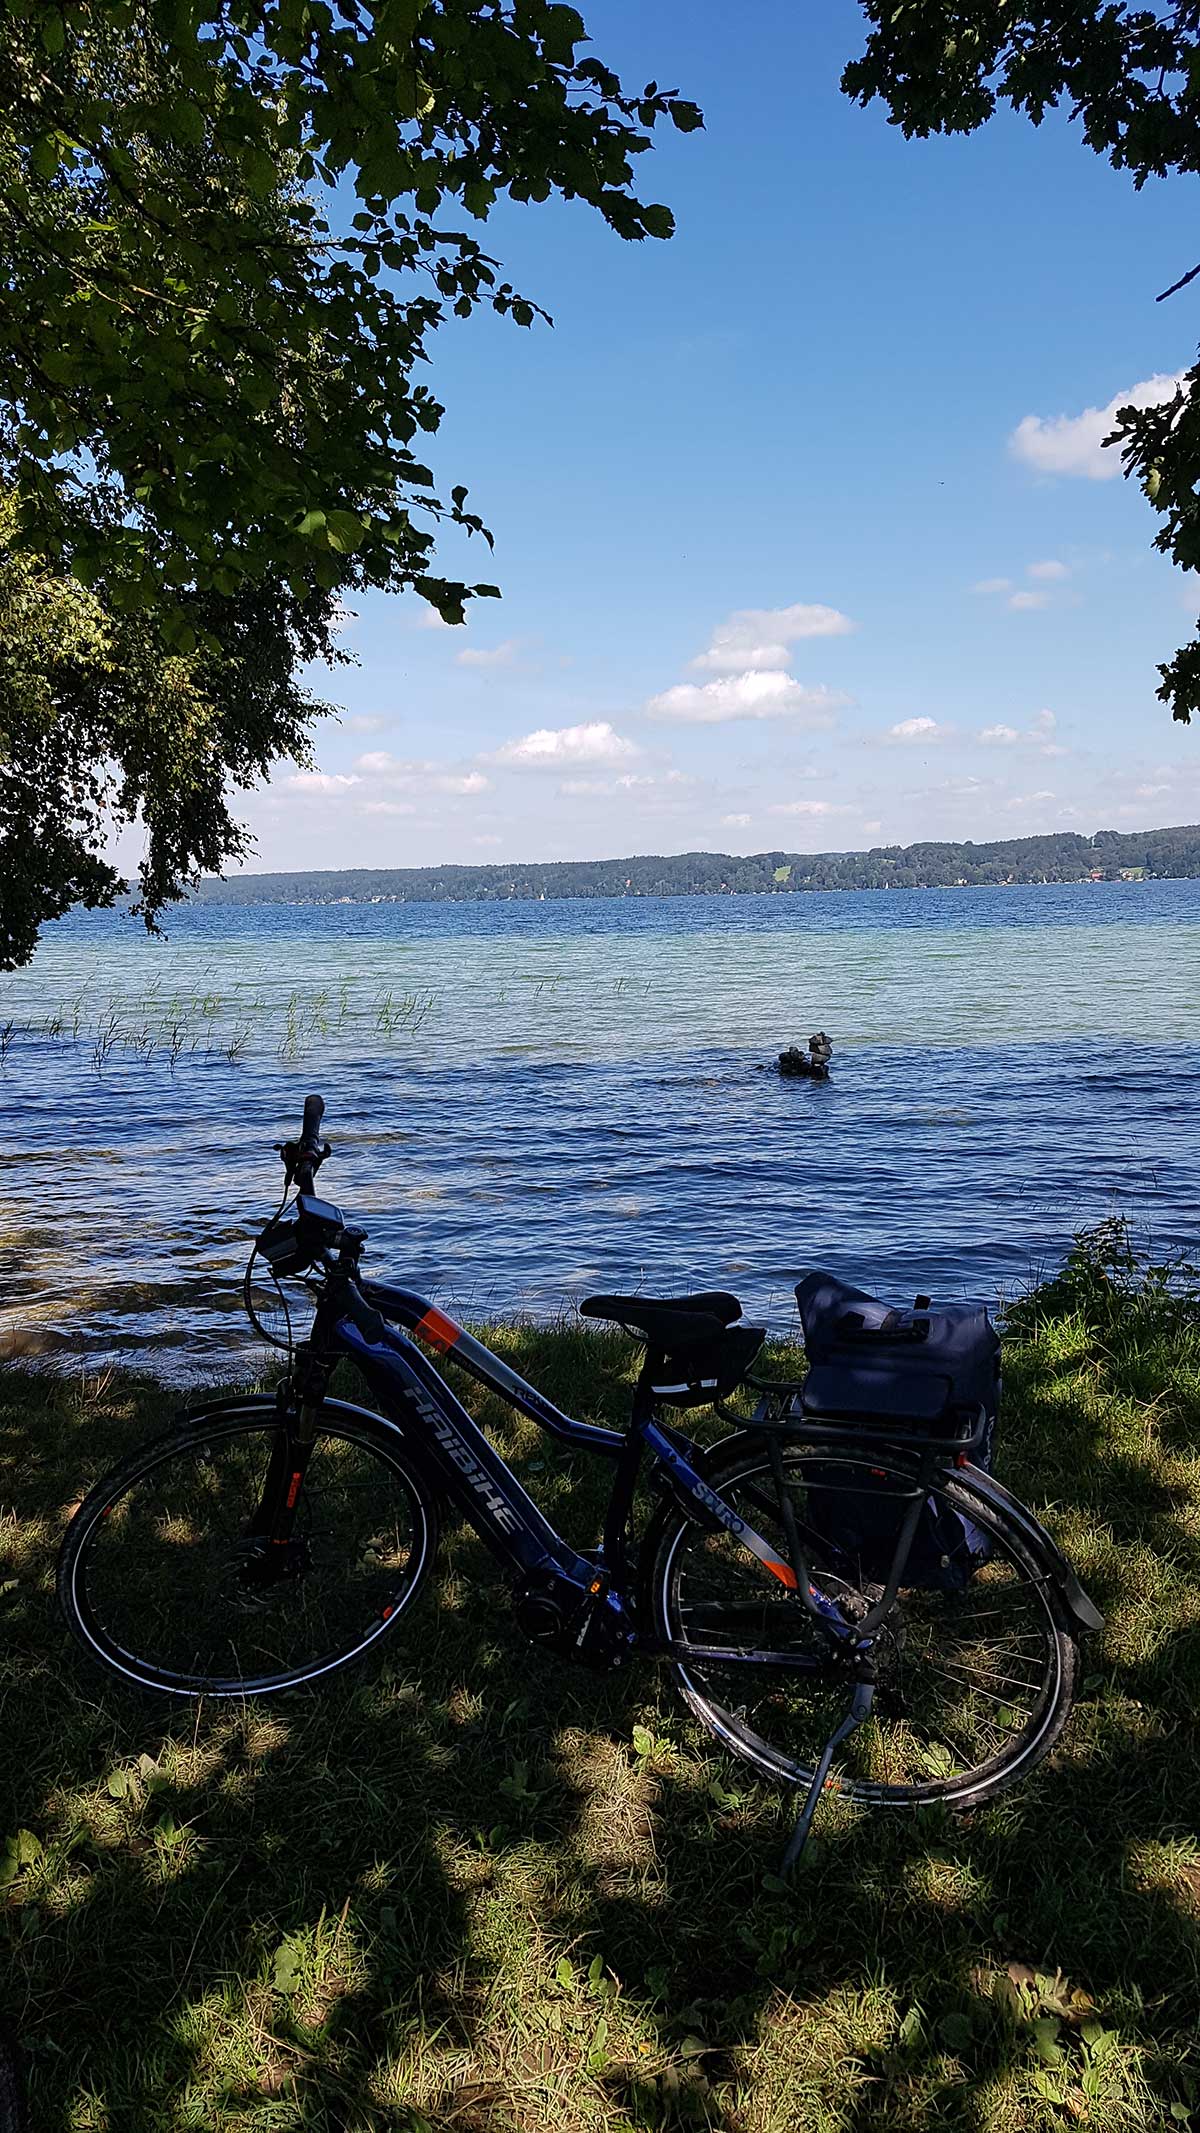 Mein JobRad Moment war am Ufer des wunderschönen Starnberger Sees.